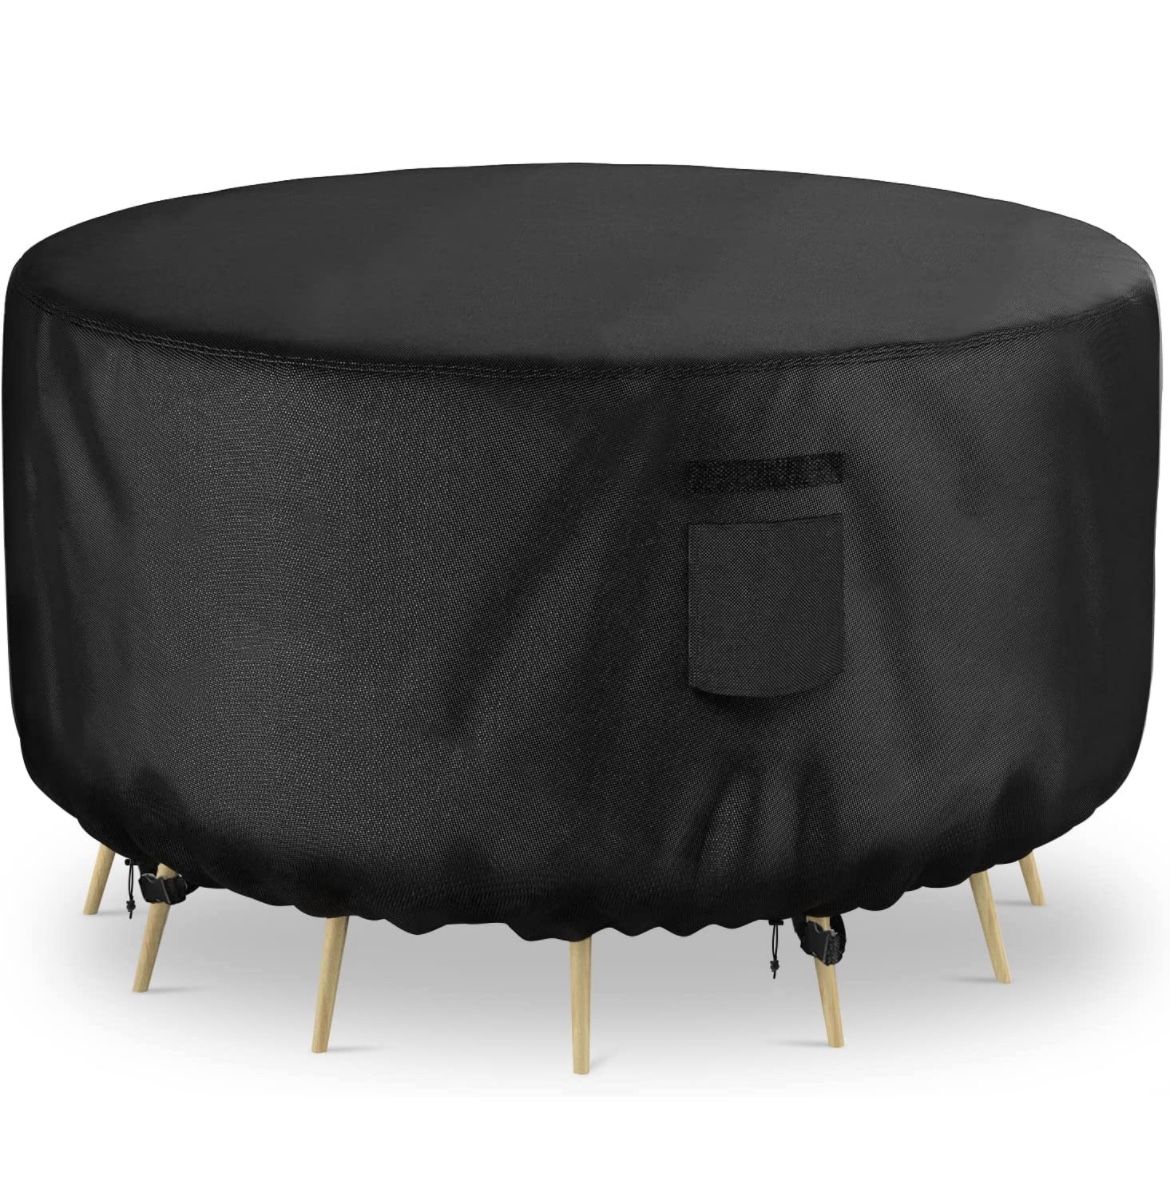 Patio Furniture Waterproof Cover